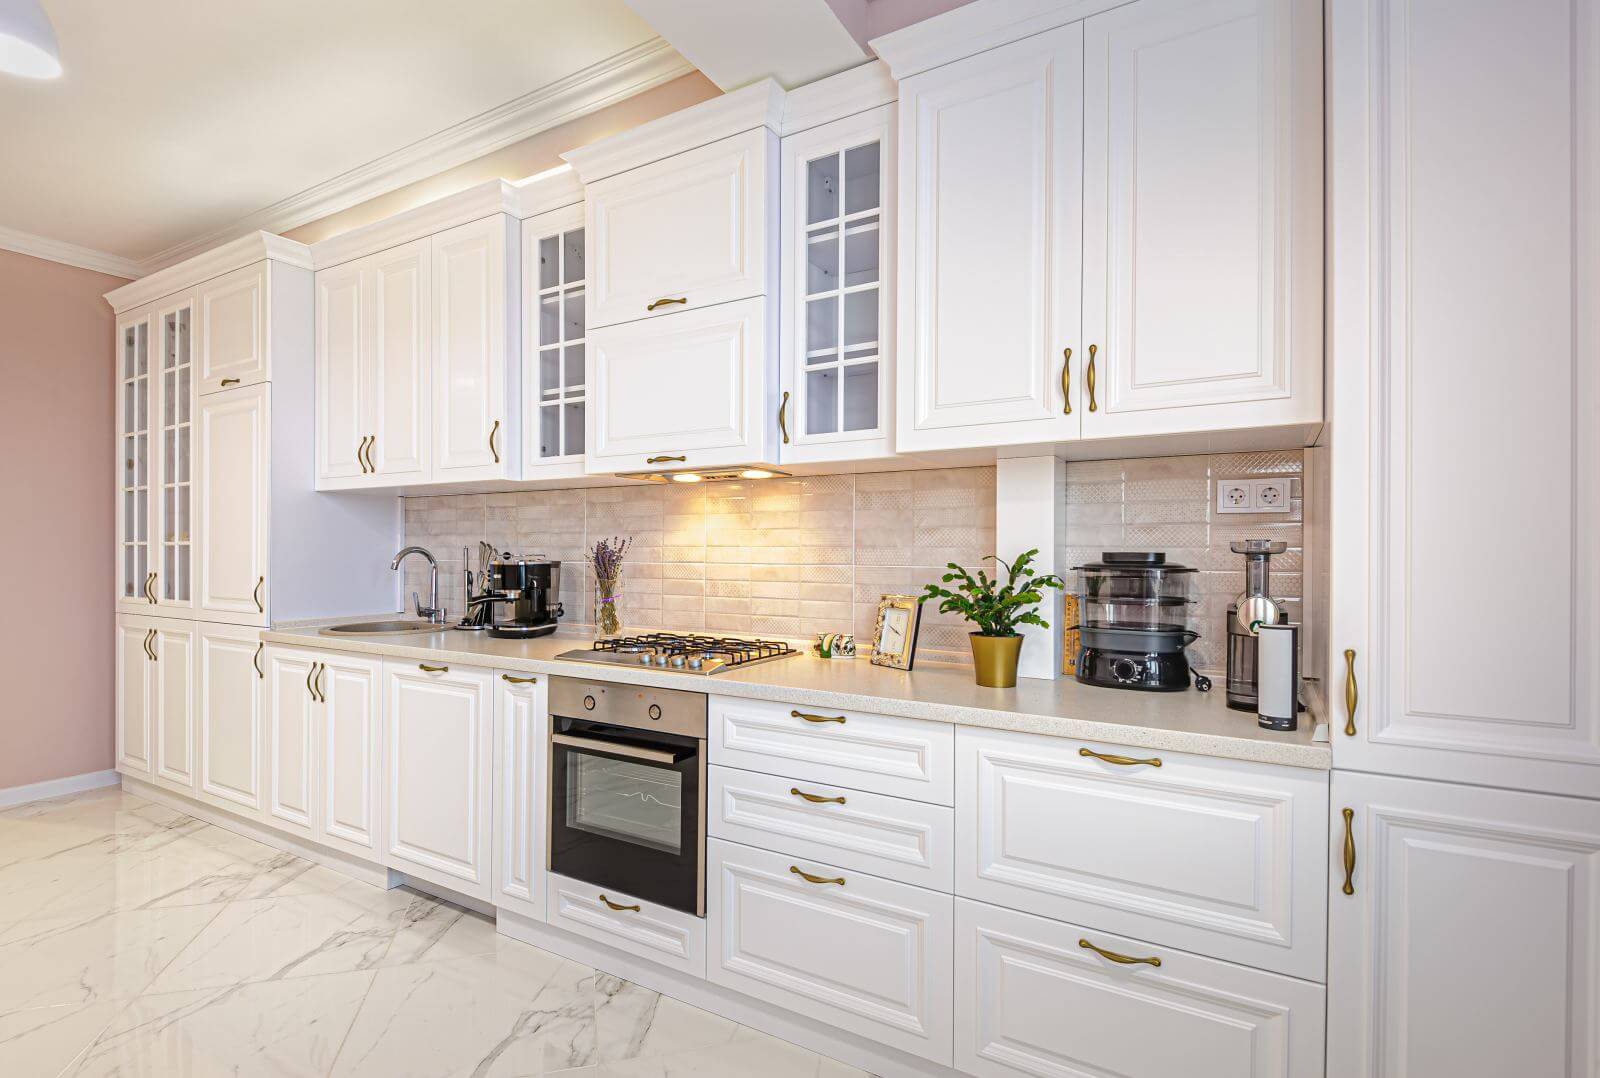 Simple and luxury modern white kitchen interior